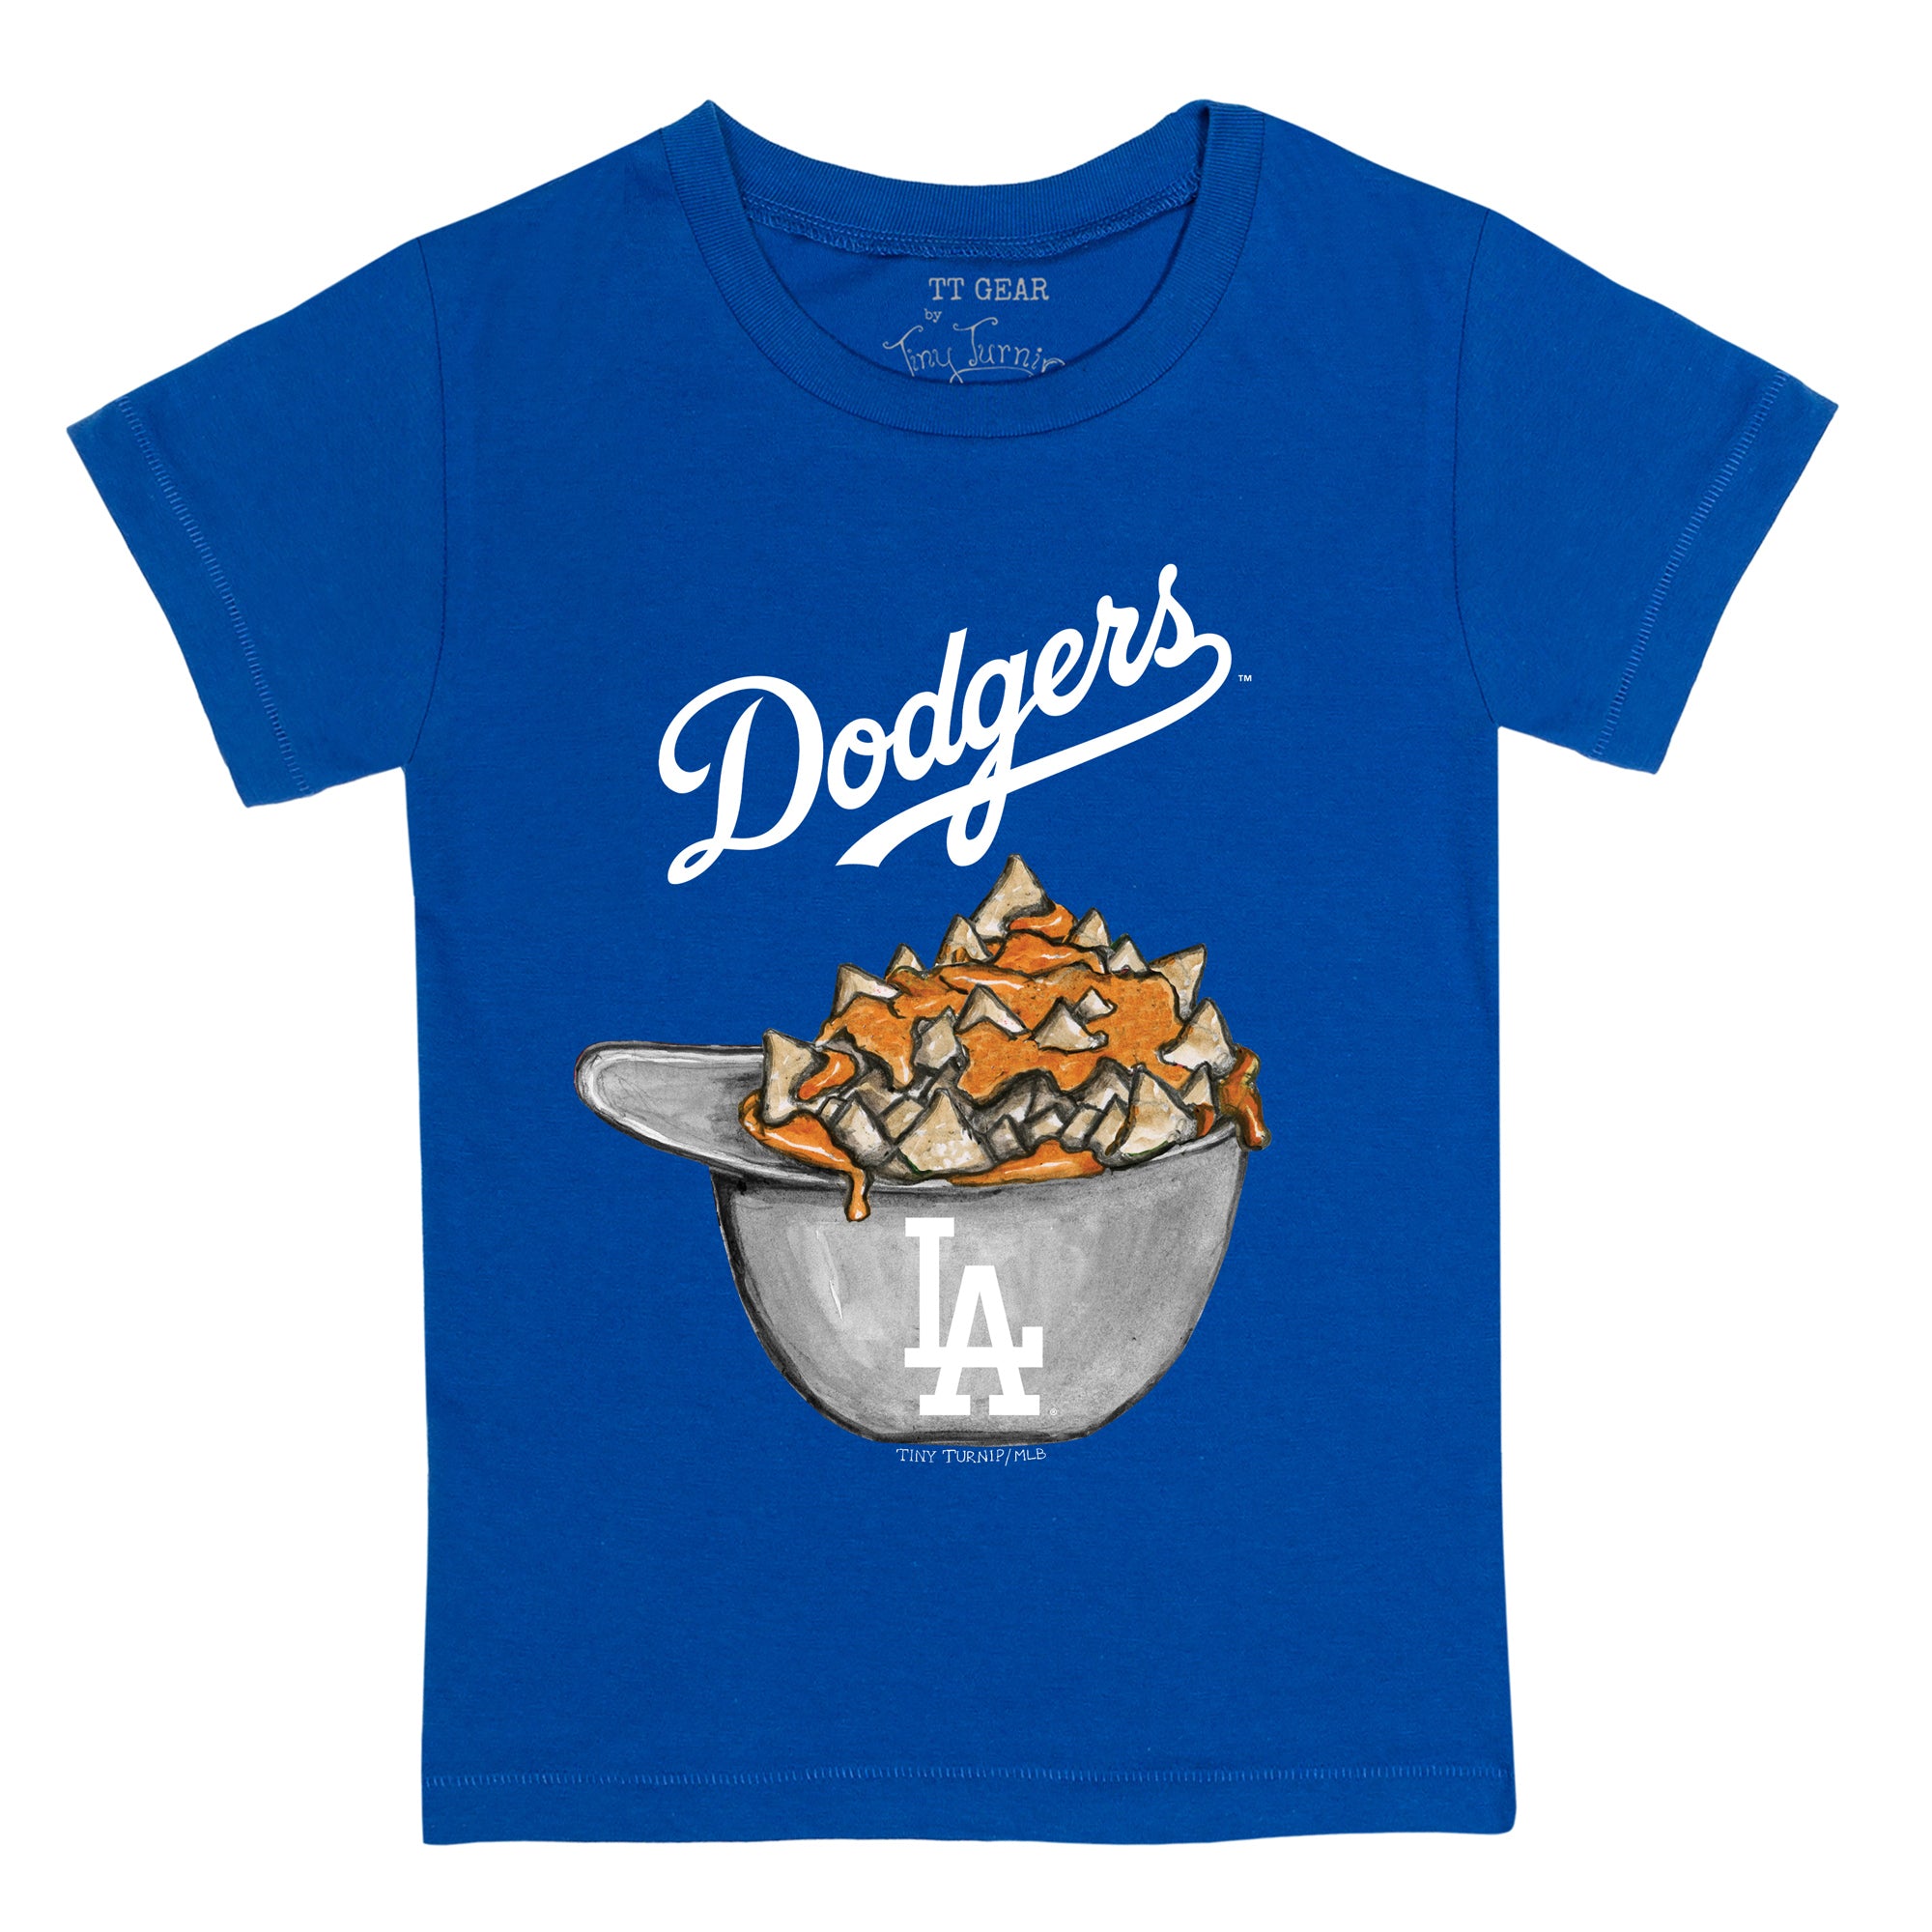 Los Angeles Dodgers Kids Apparel, Kids Dodgers Clothing, Merchandise